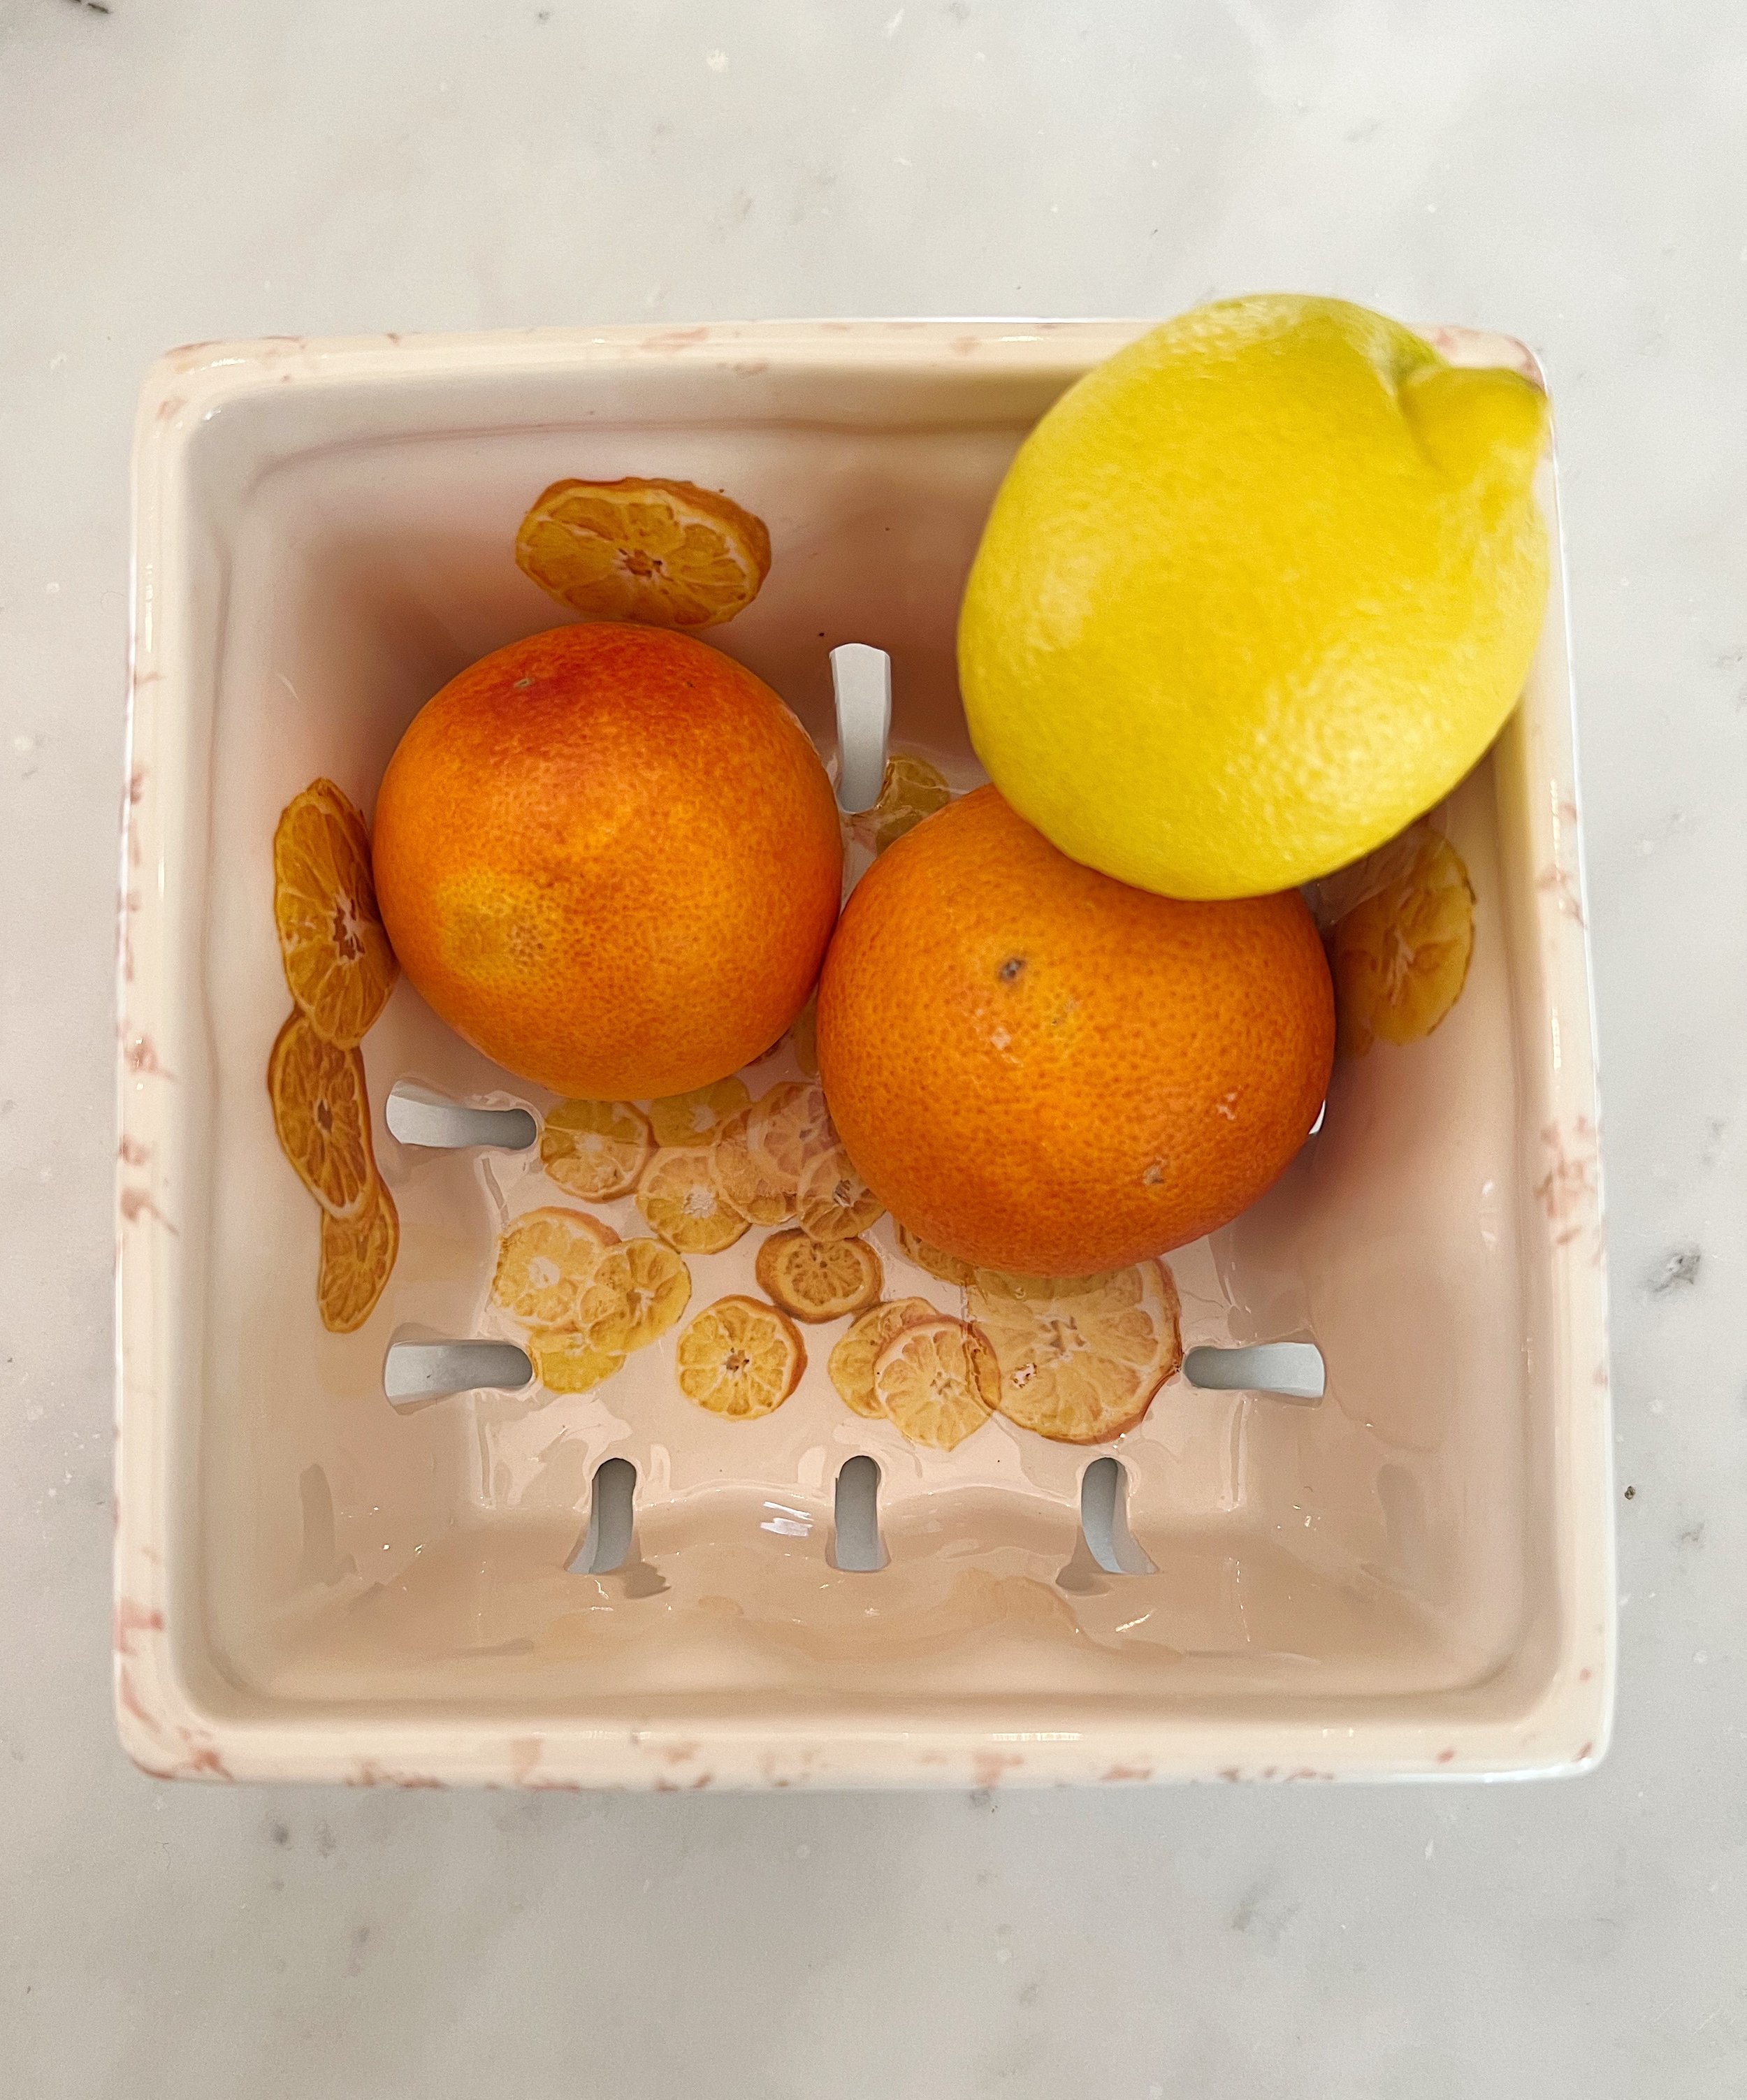 Kumquat Ceramic Berry Basket with Oranges and Lemon